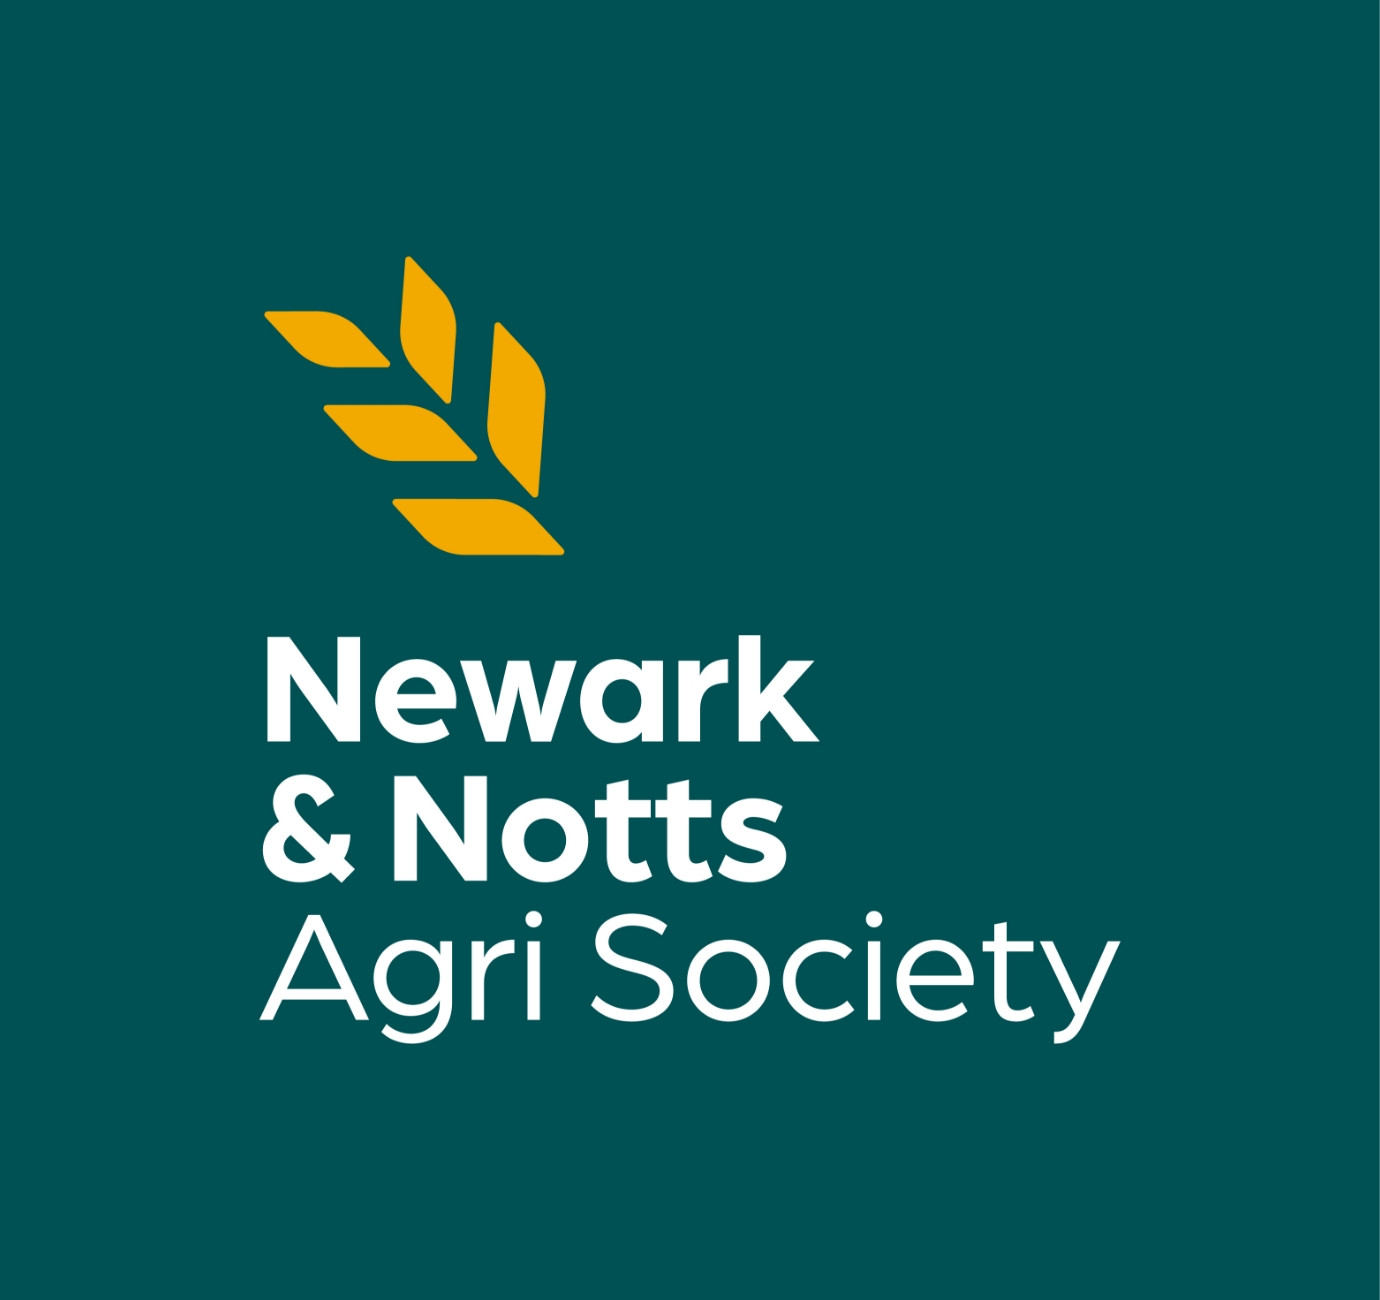 Newark & Notts Agricultural Society logo & branding design by Root Studio